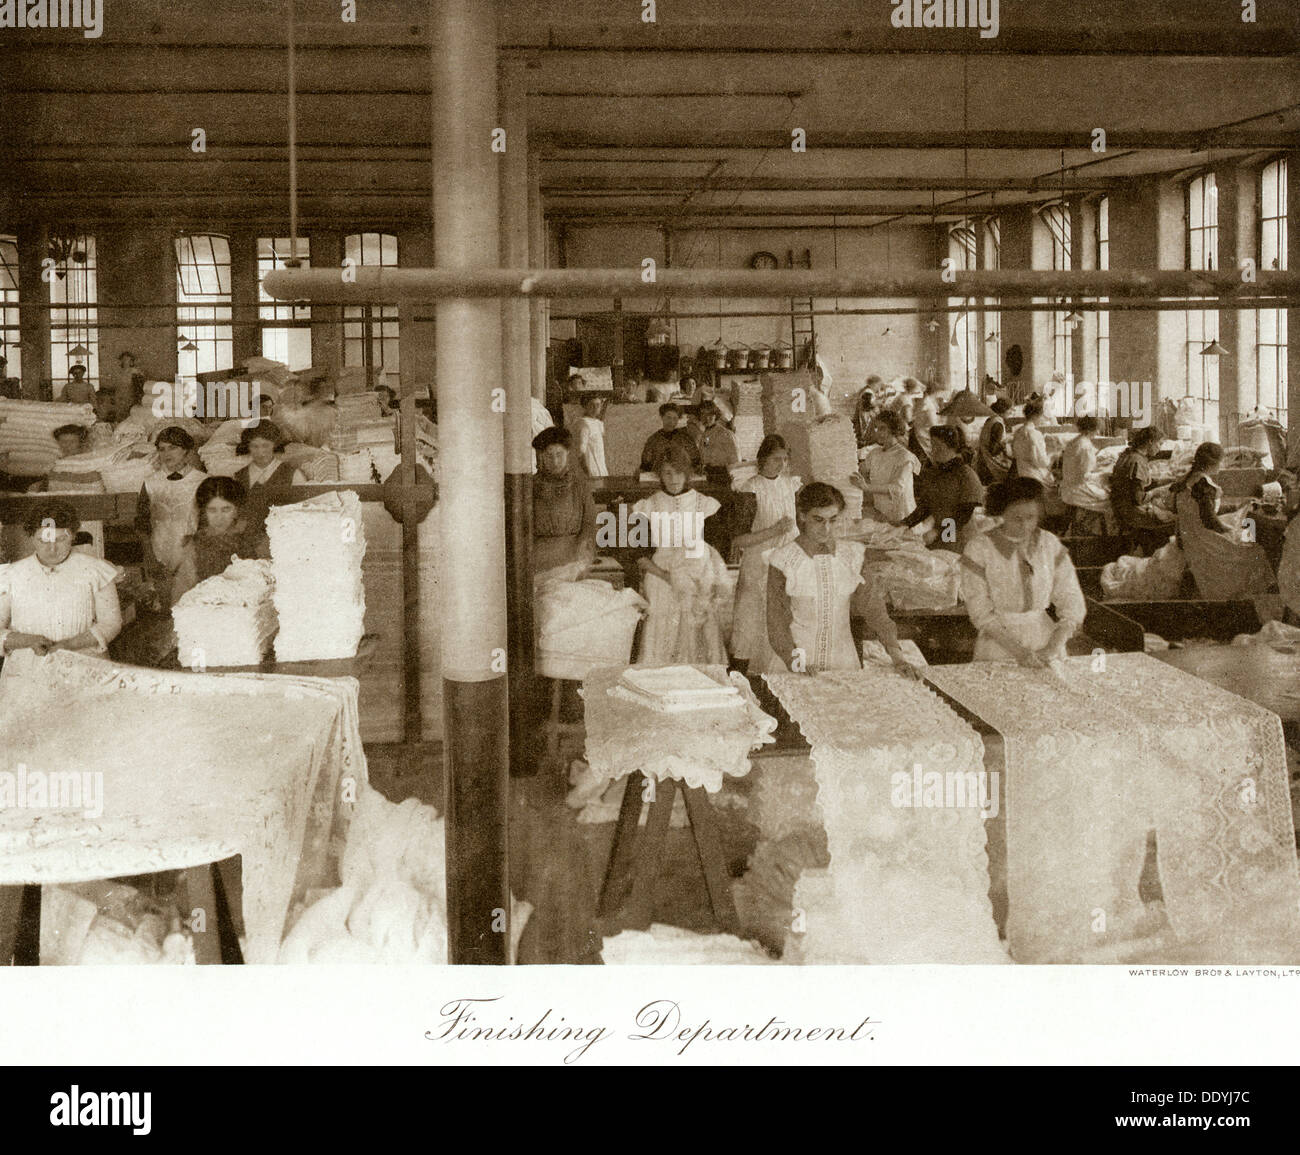 Thomas Adams Lace Factory, Nottingham, Nottinghamshire, 1914. Artist: Waterlow Bros & Layton Ltd Stock Photo